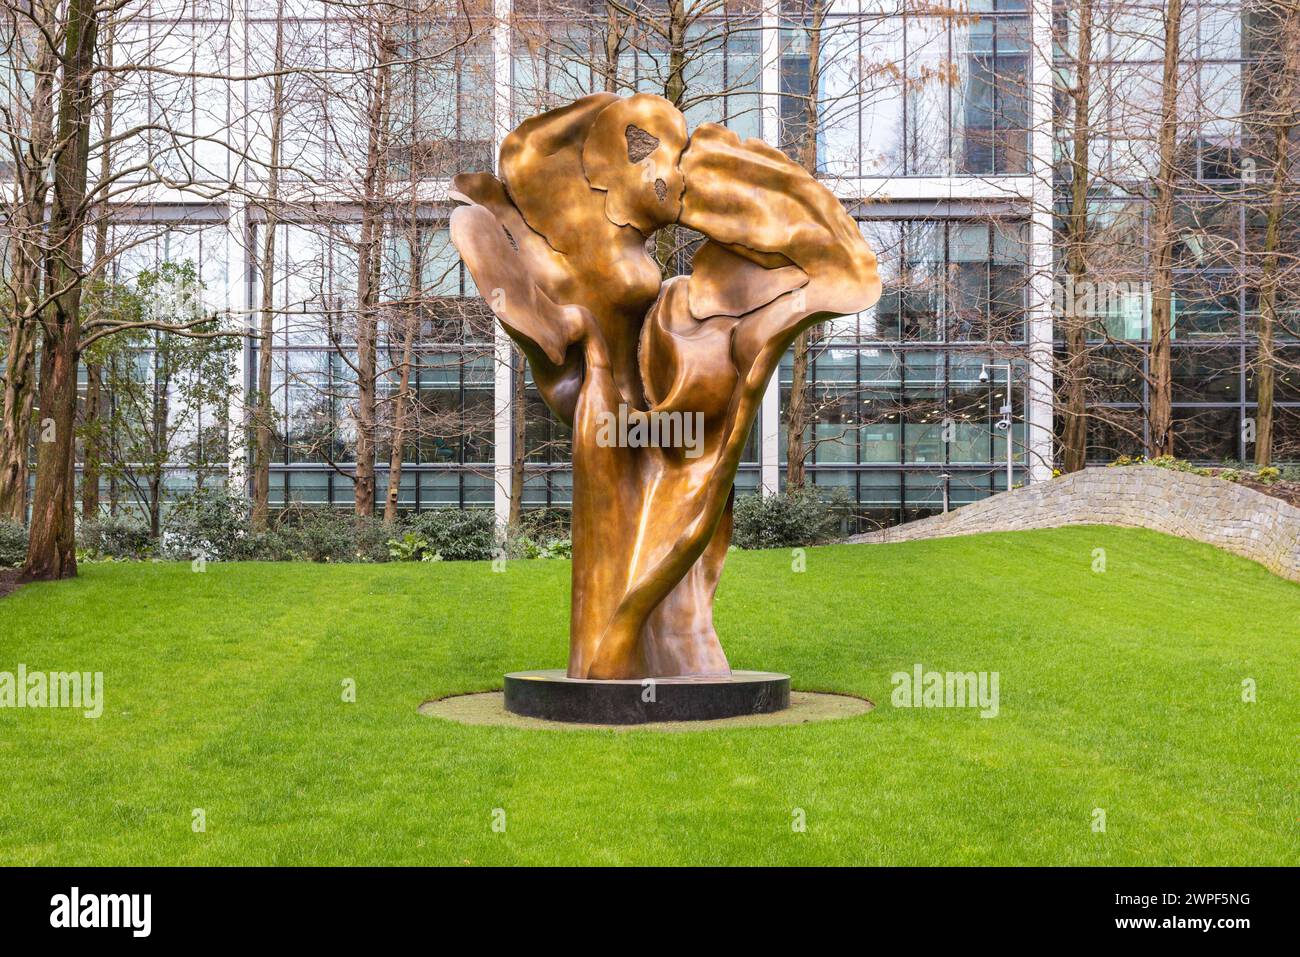 Fortuna, sculpture en bronze BZ Helaine Blumenfeld OBE dans Jubilee Gardens, Canary Wharf, Londres, Angleterre, Royaume-Uni Banque D'Images